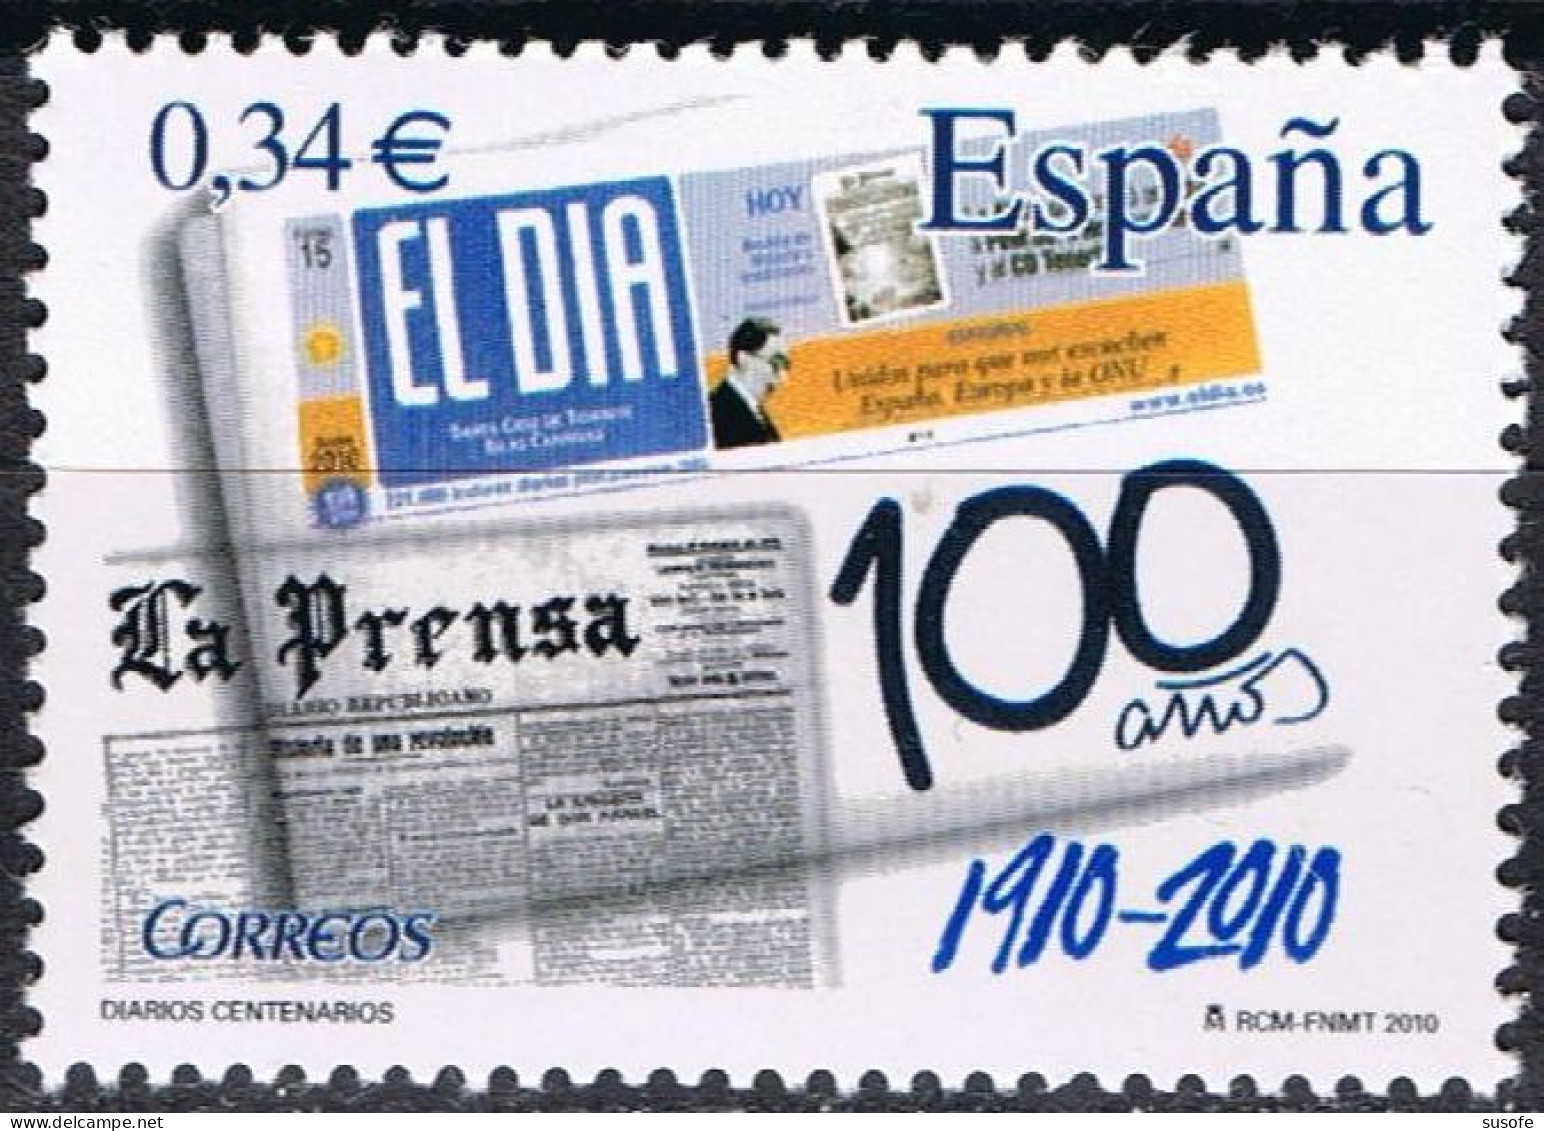 España 2010 Edifil 4604 Sello ** Diarios Centenarios El Dia (1910-2010) Tenerife Michel 4551 Yvert 4256 Spain Stamp - Ongebruikt